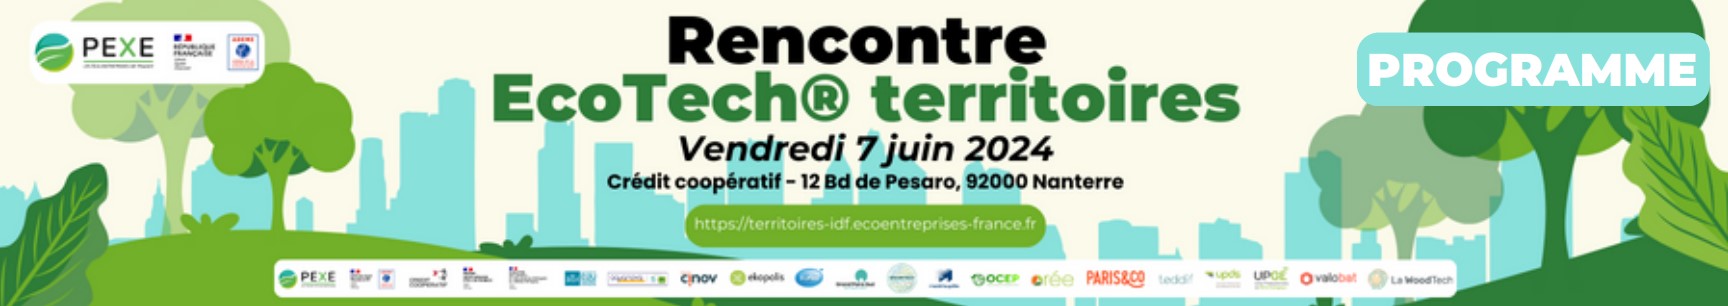 Rencontre EcoTech Territoires